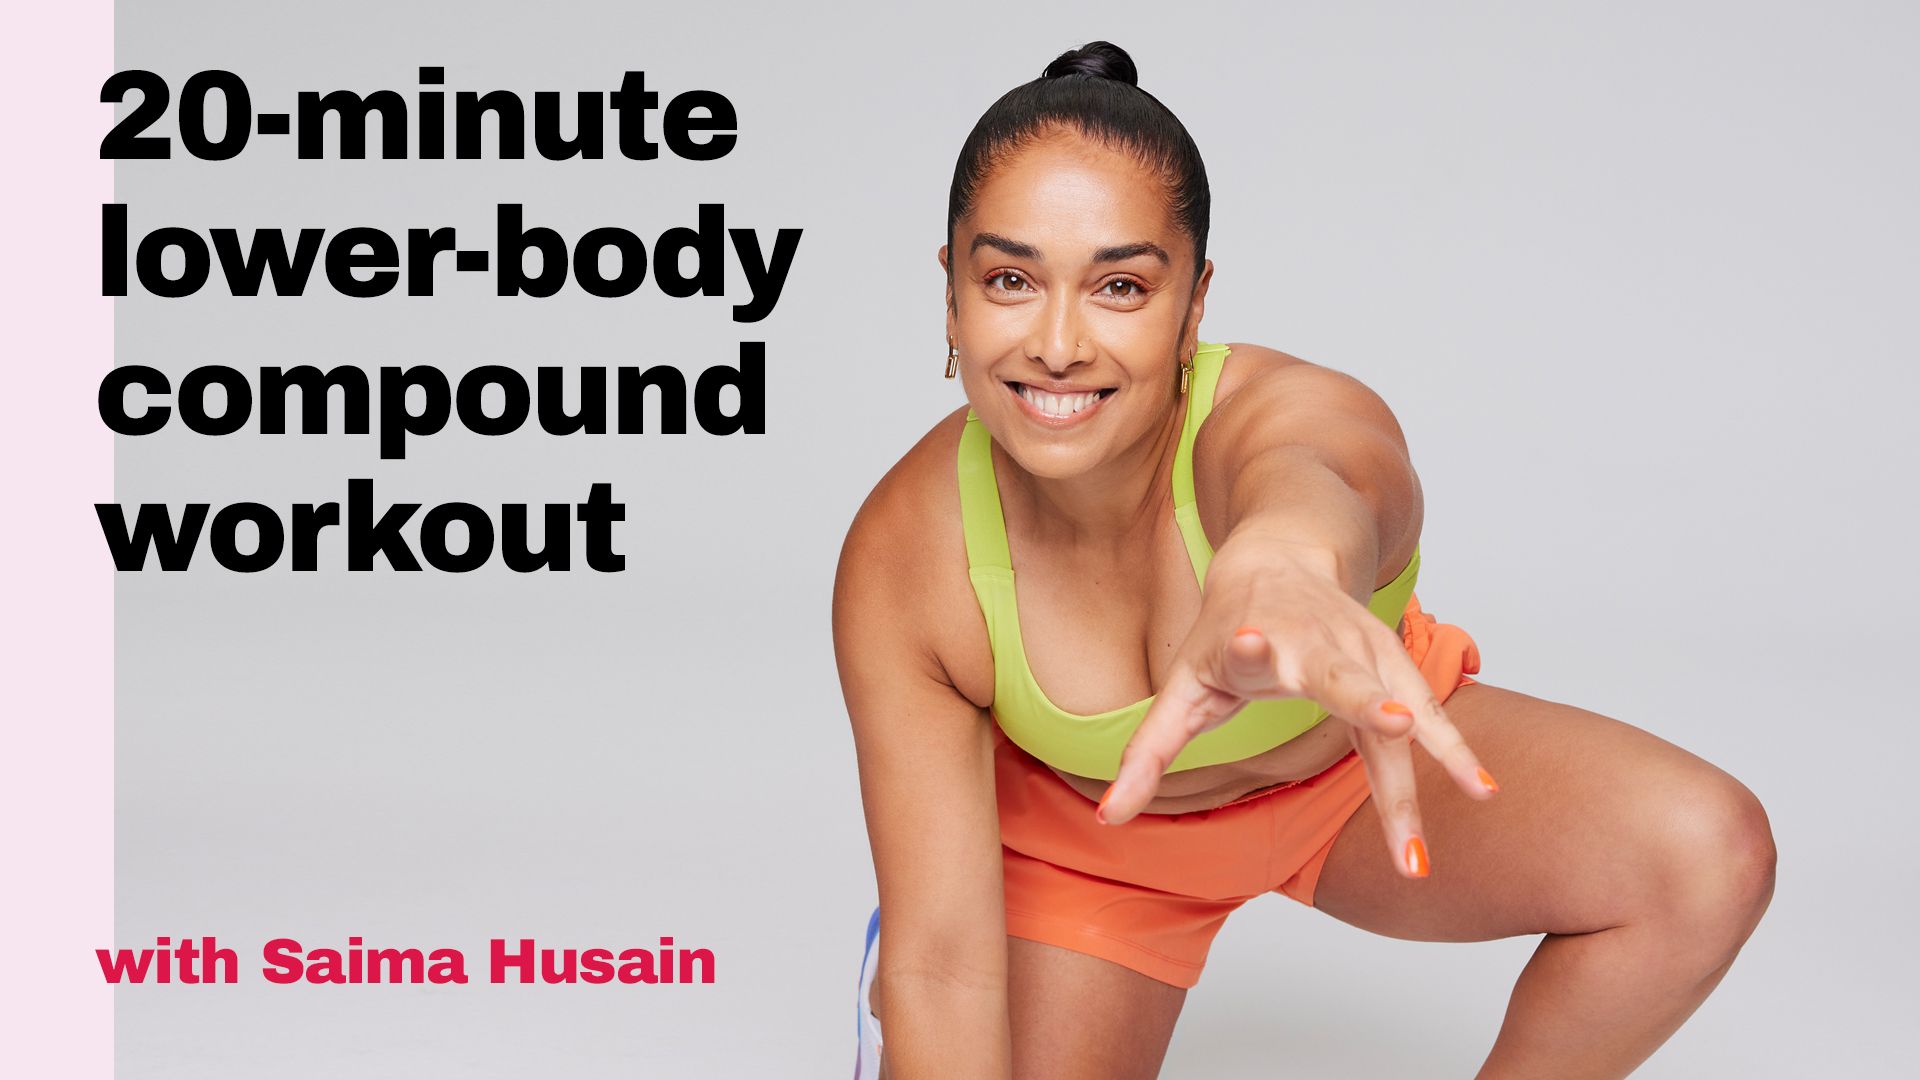 20-minute lower-body compound workout with Saima Husain